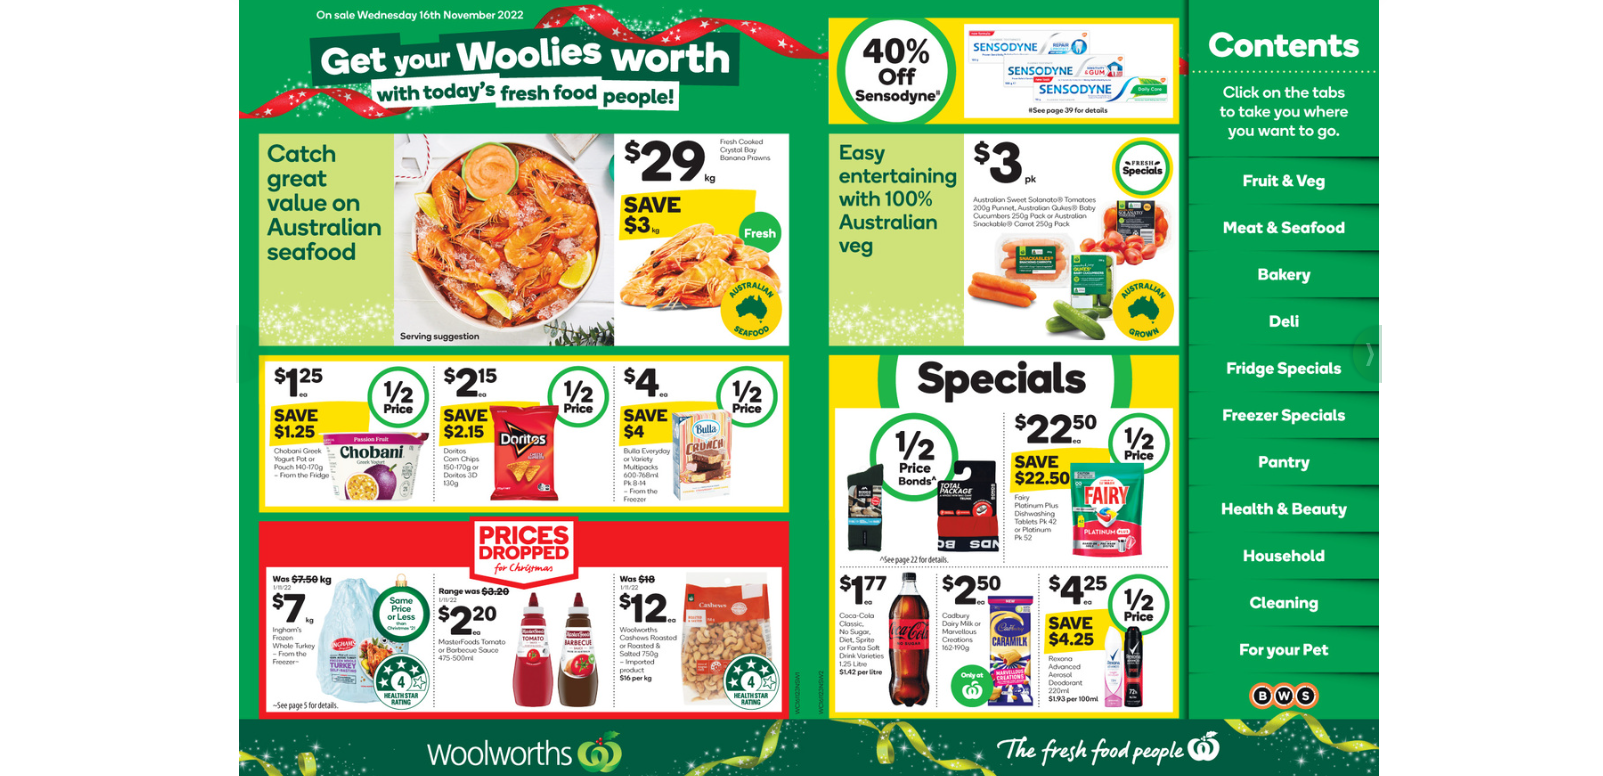 Woolworths - 1/2 price Bonds, OLAY, Doritos, Chobani